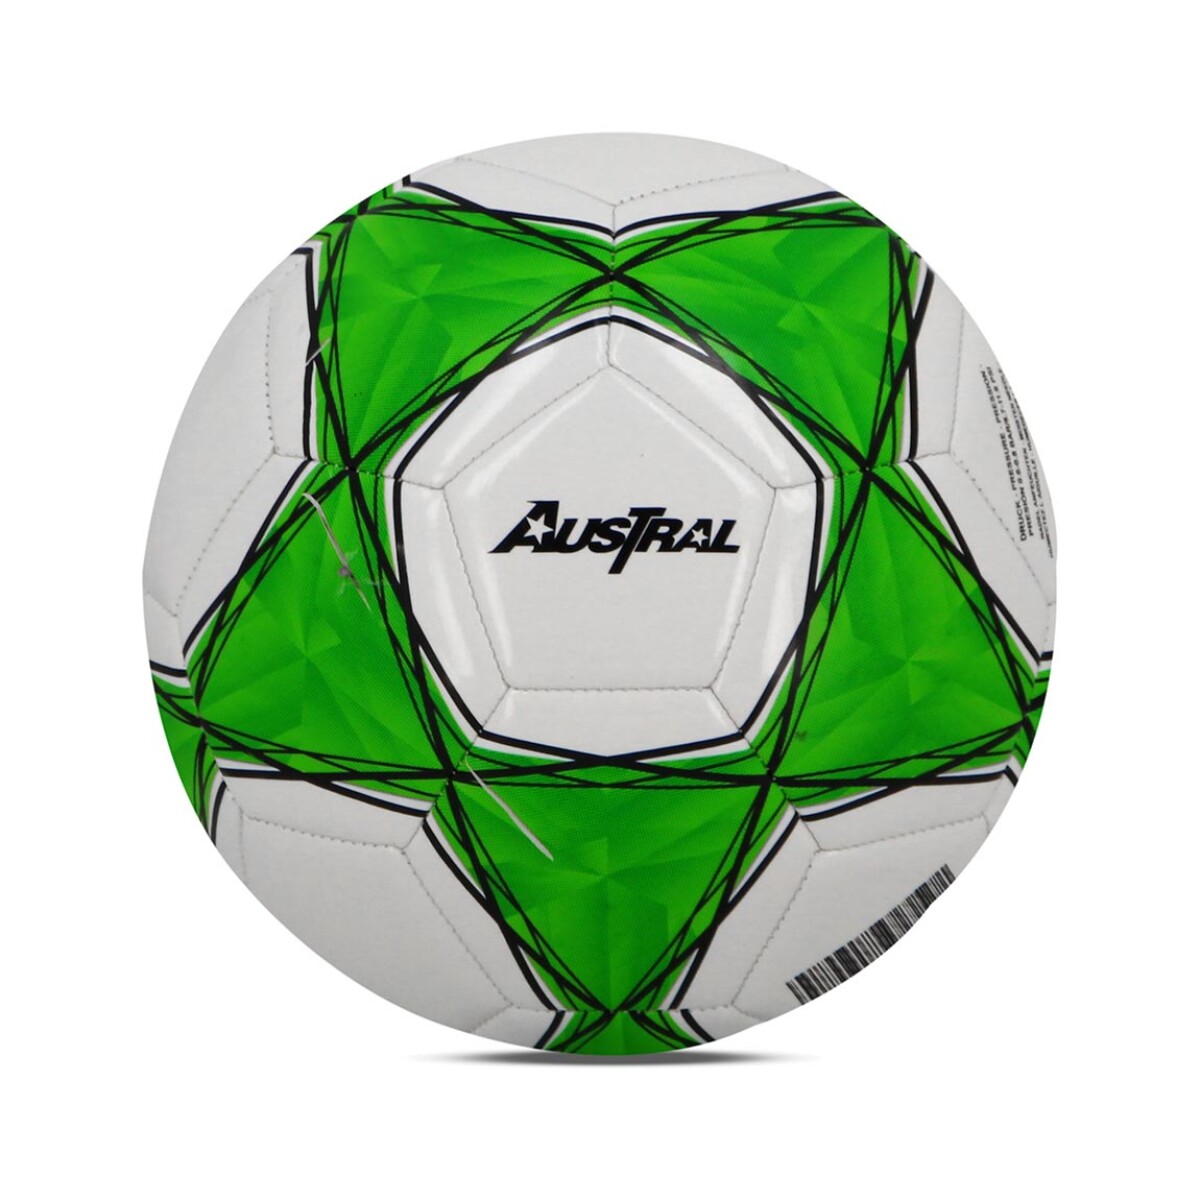 Austral Pelota Futbol Cancha - Blanco-verde 